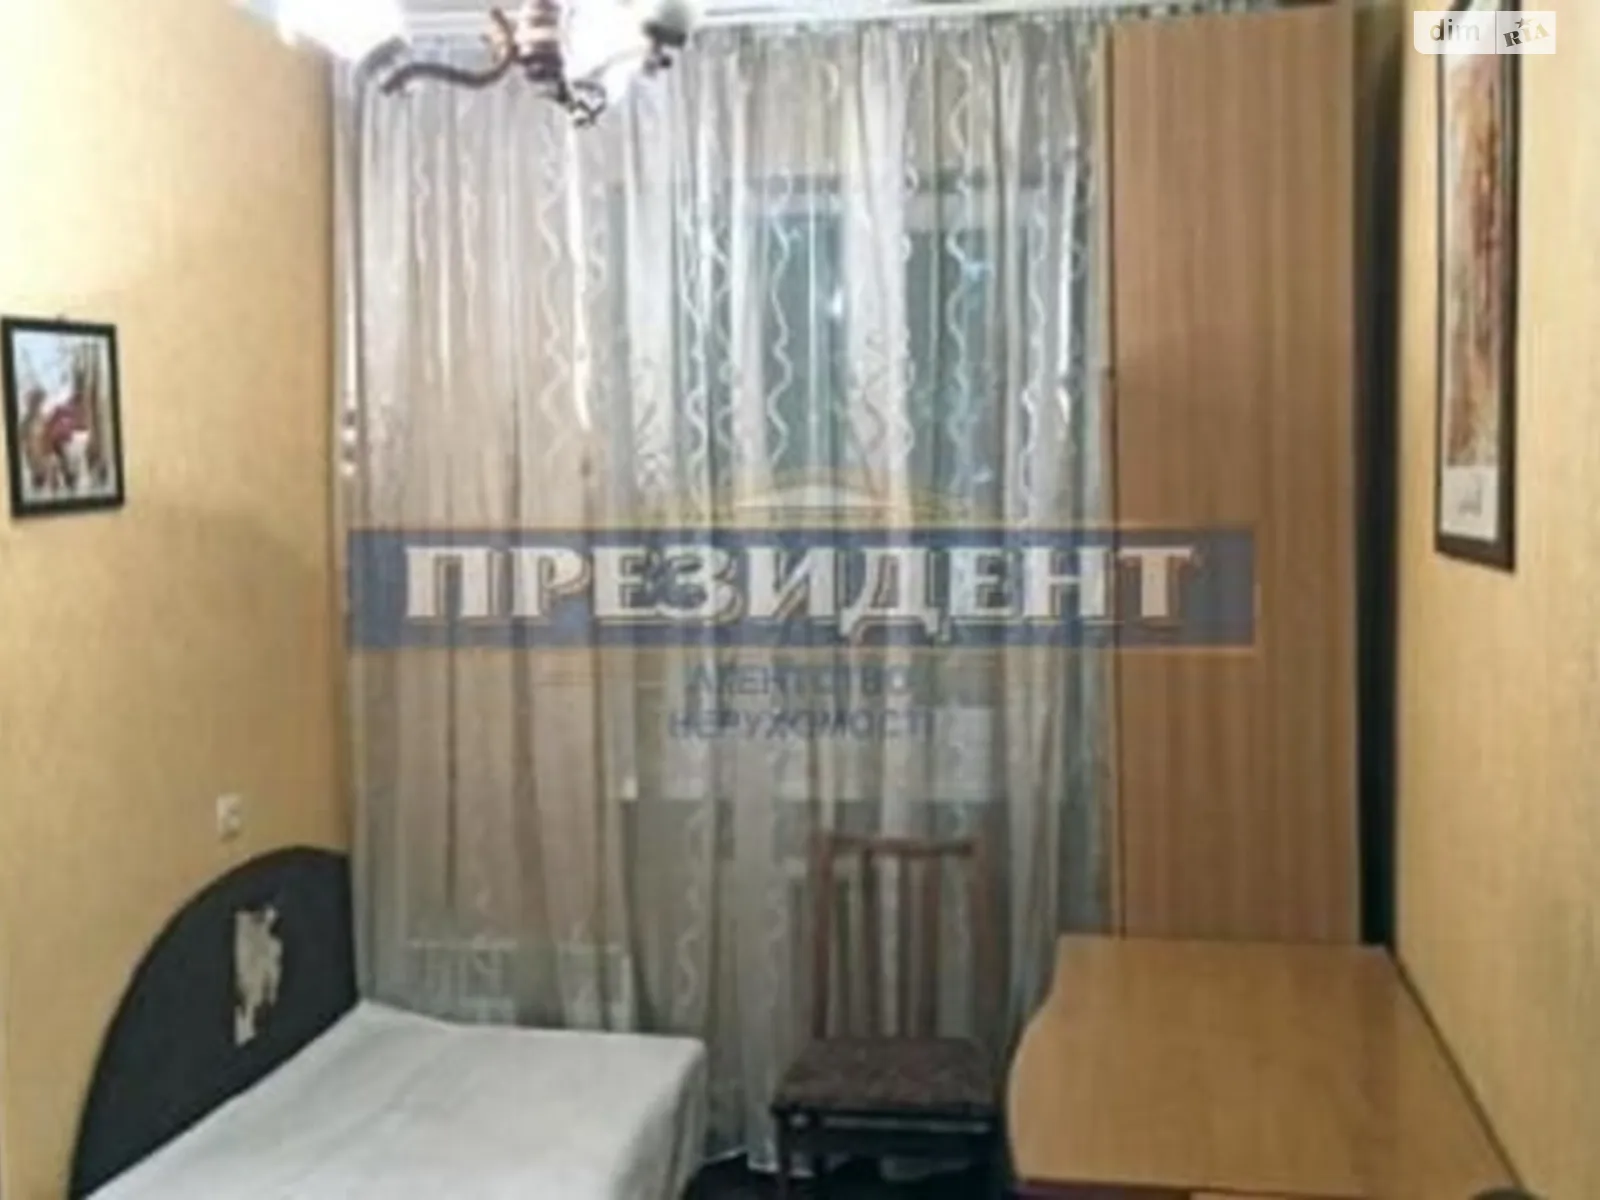 Продается комната 23 кв. м в Одессе, цена: 7000 $ - фото 1